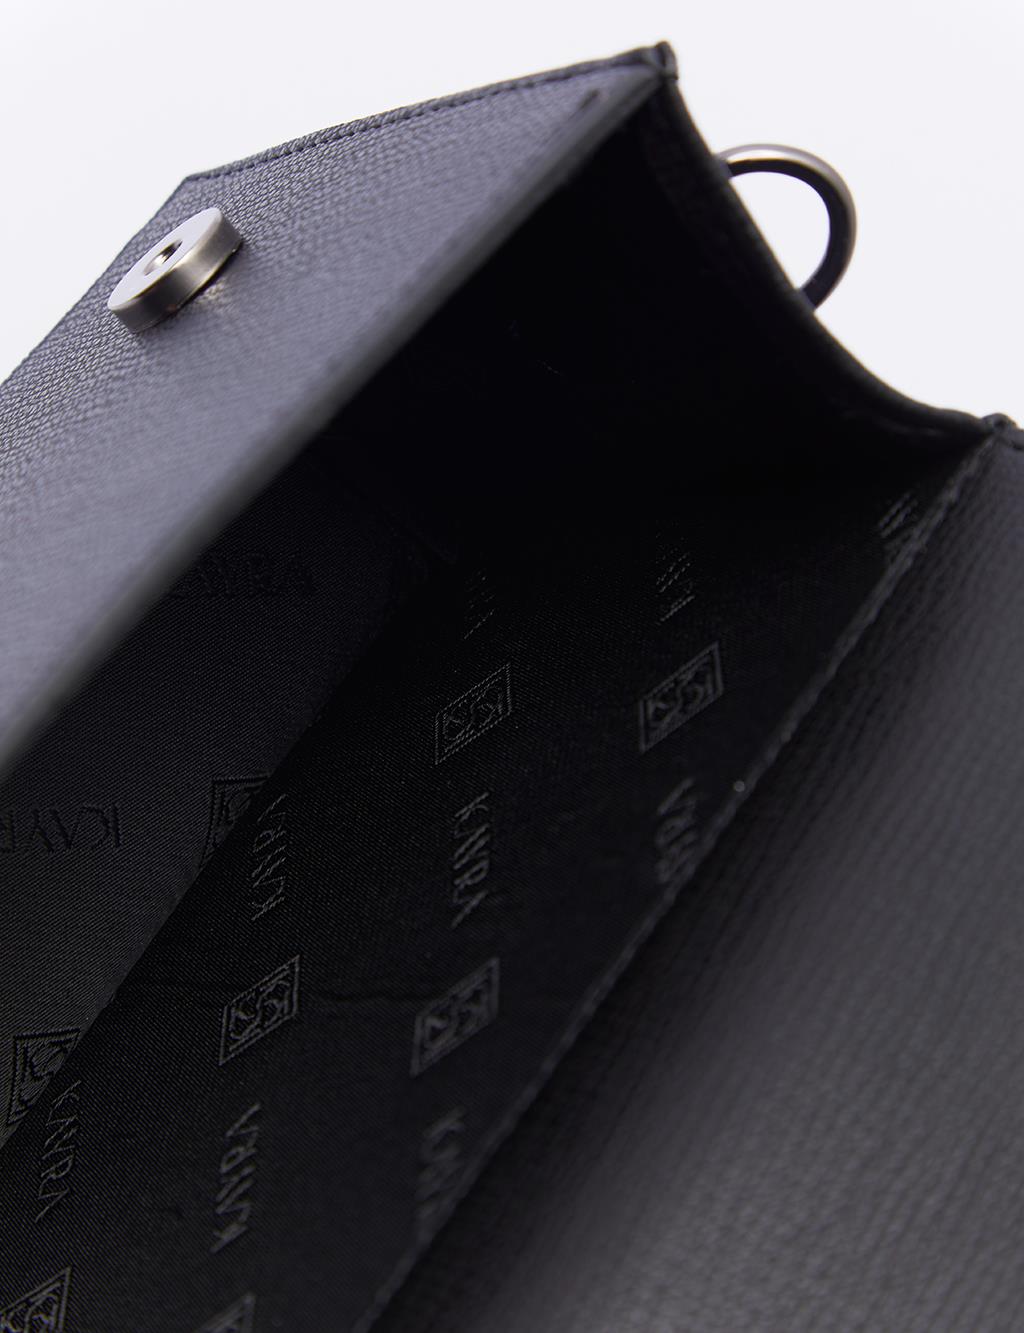  Chain Strap Cover Black Bag 